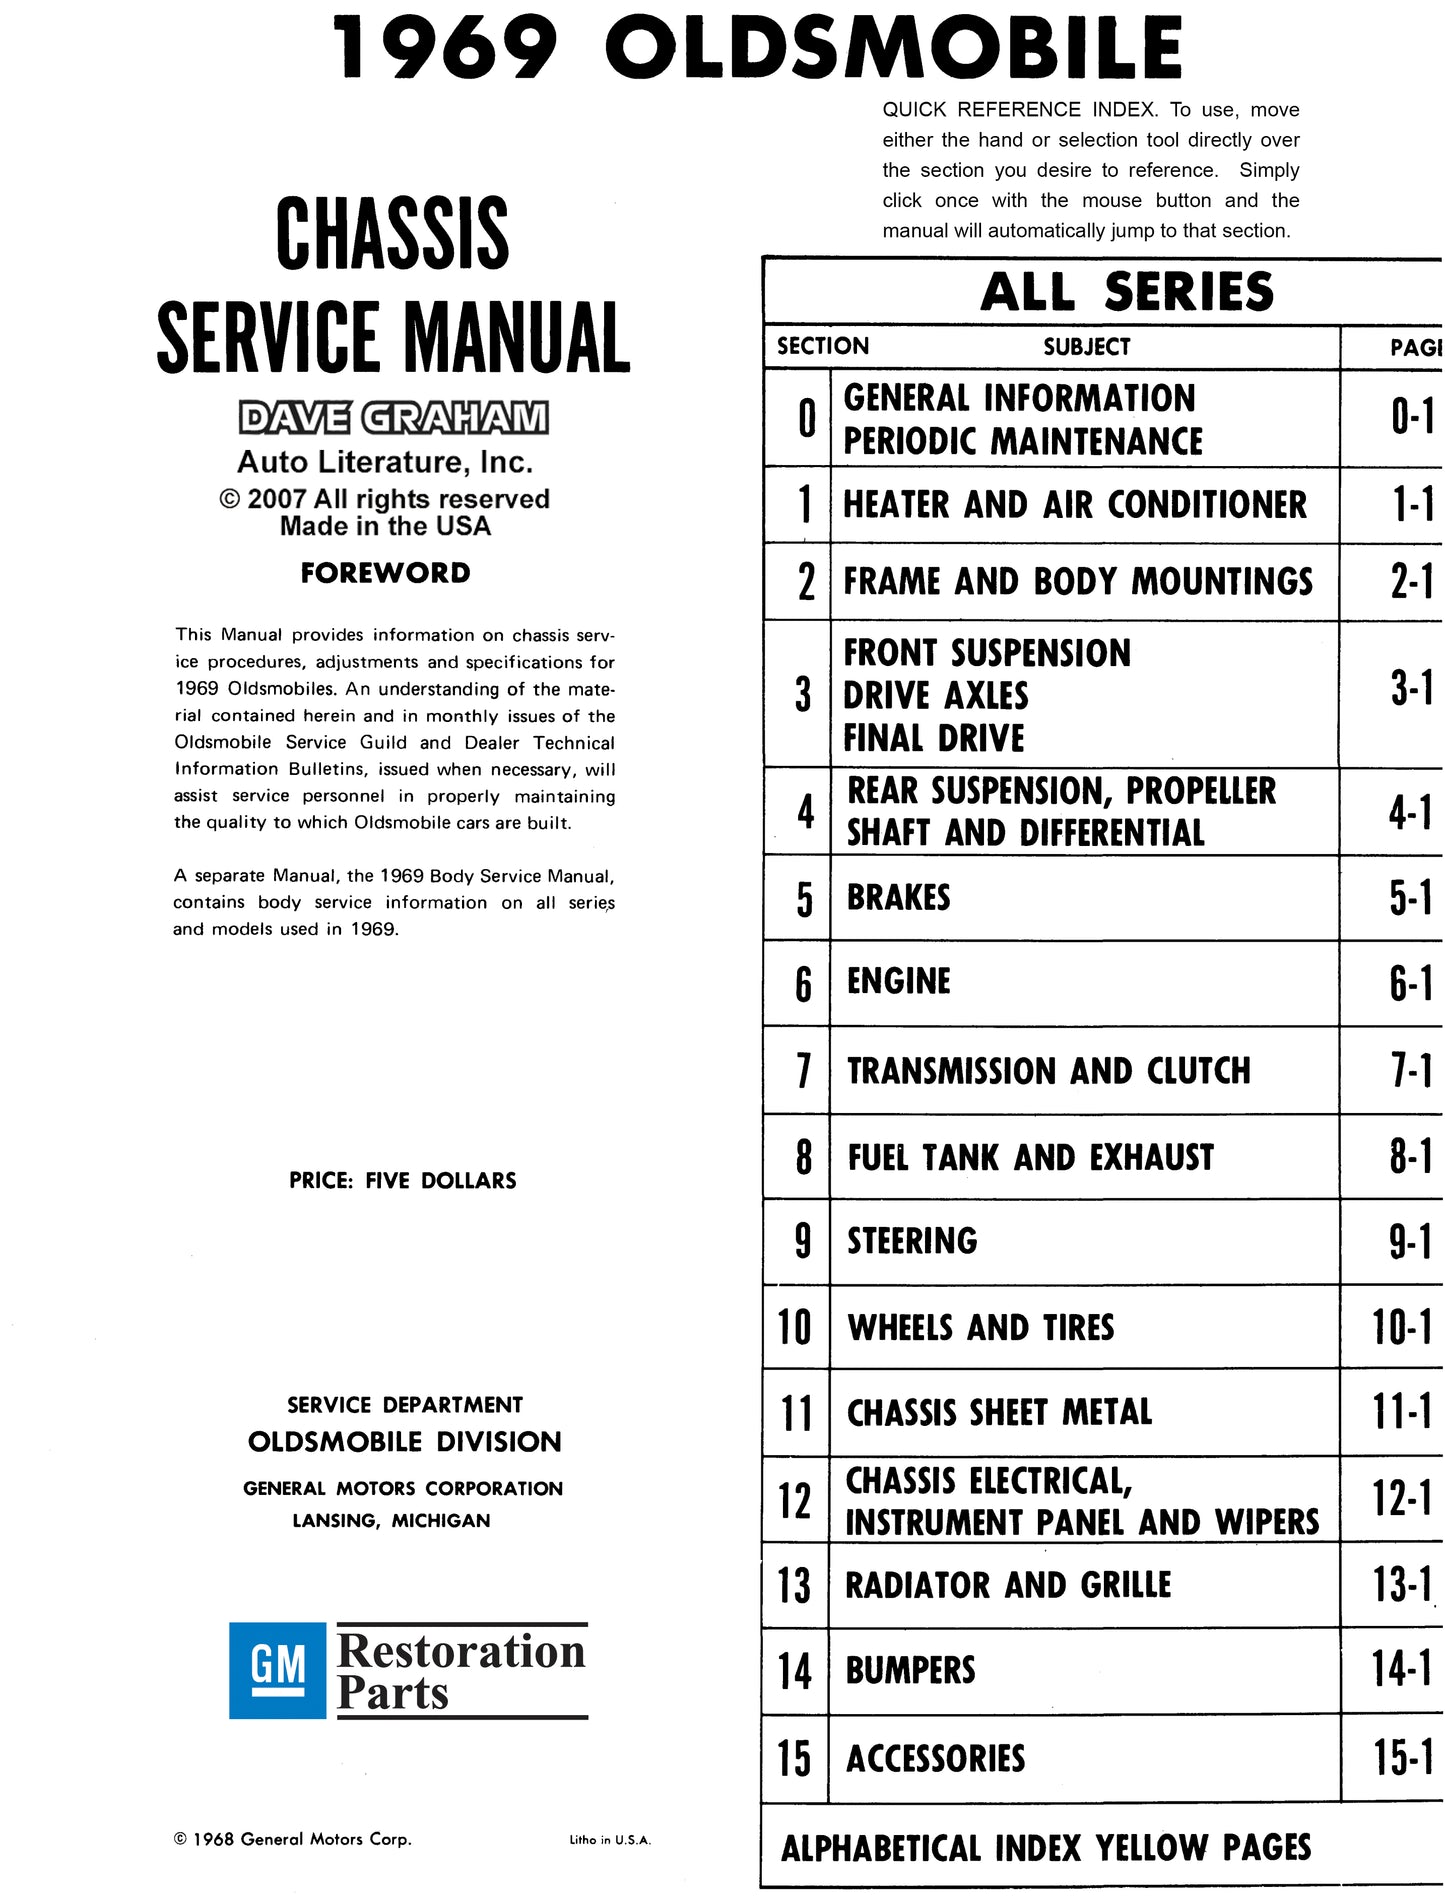 1969 Oldsmobile Shop & Body Manual - All Models